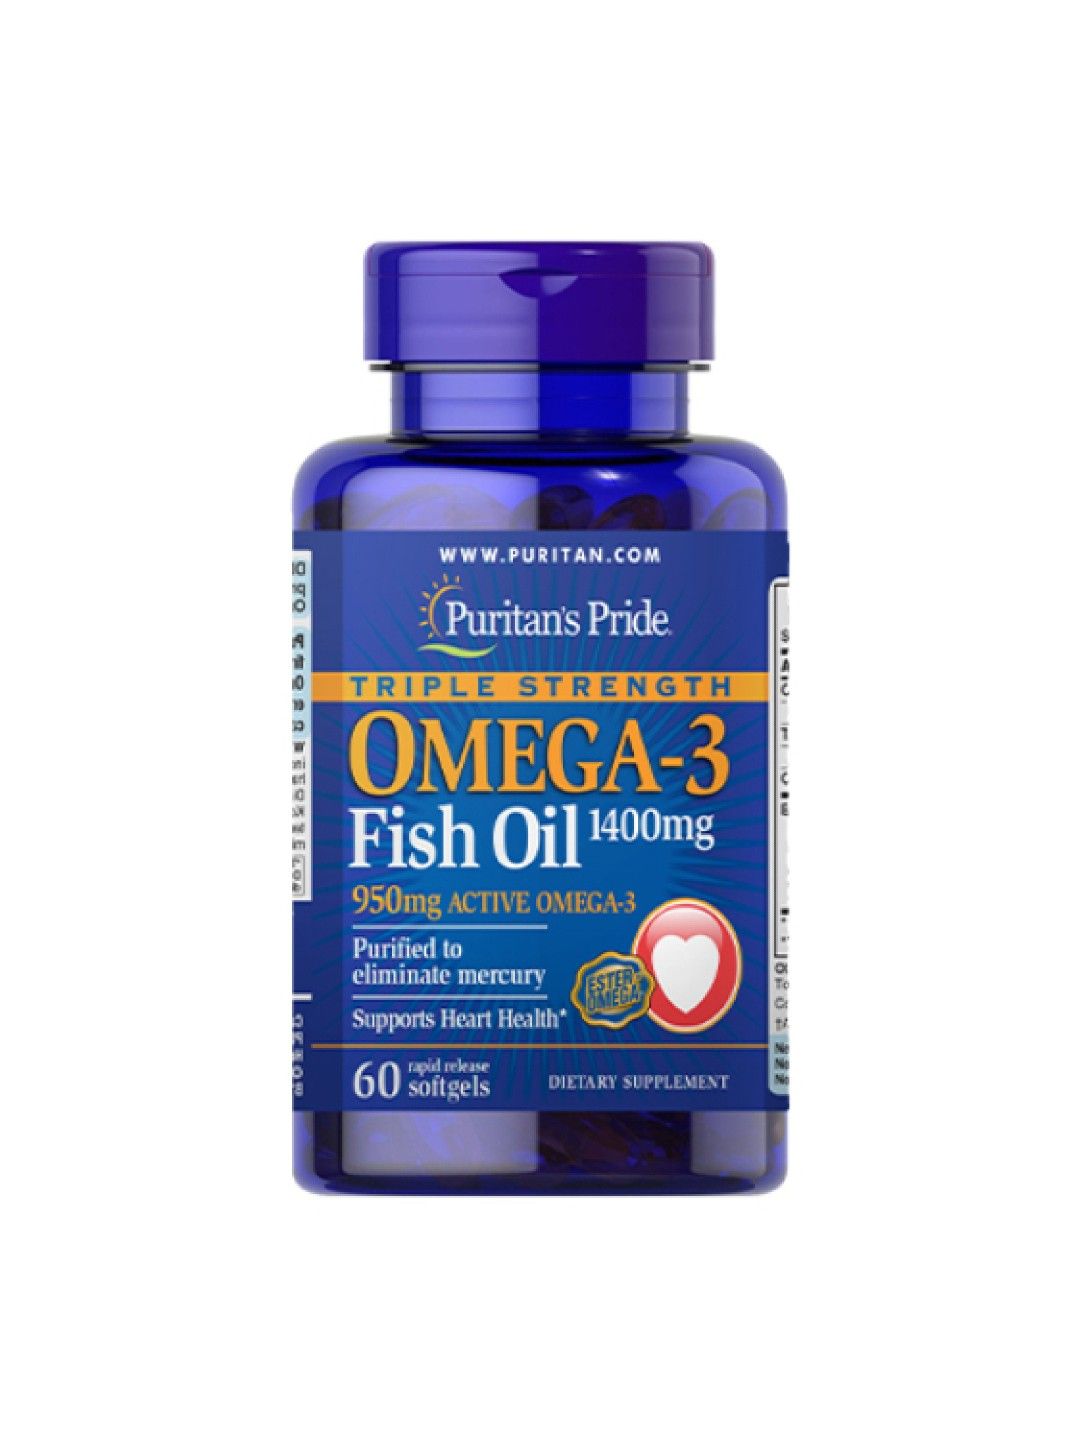 Puritan's Pride Fish Oil Omega 3 1400 mg Triple Strength (60 softgels)